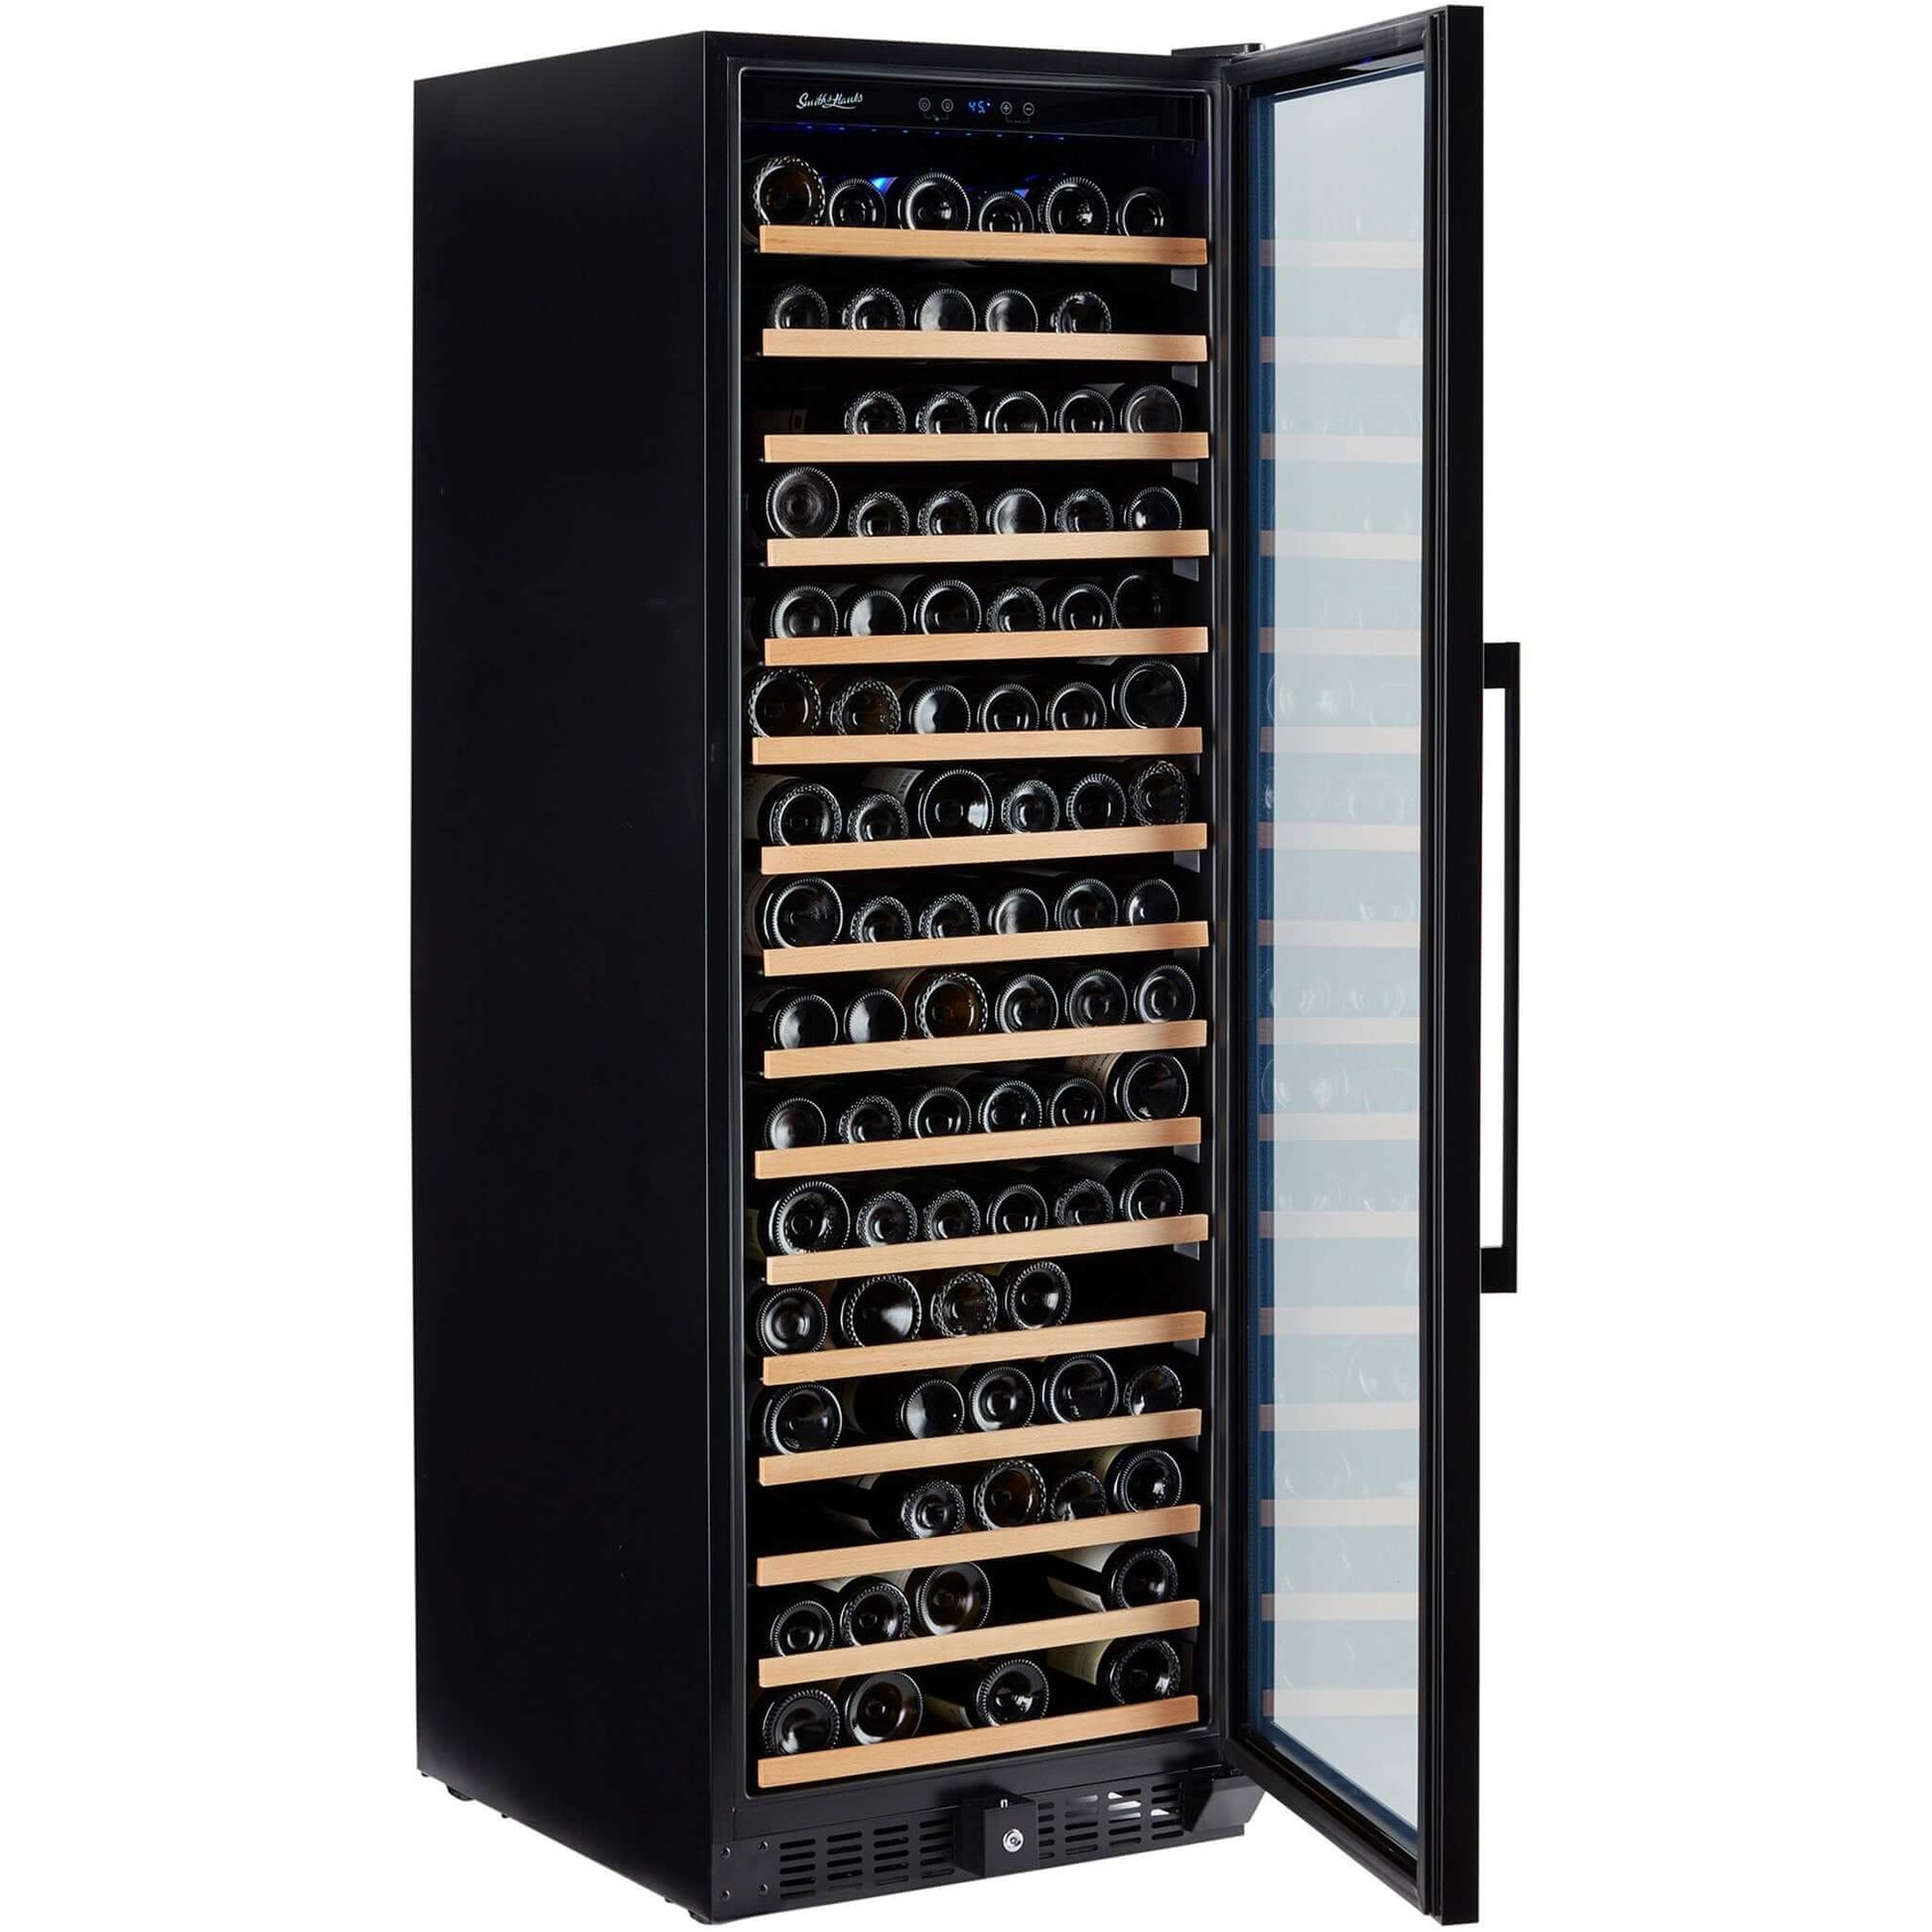 Smith & Hanks 166 Bottle Black Stainless Wine Refrigerator, Single Zone